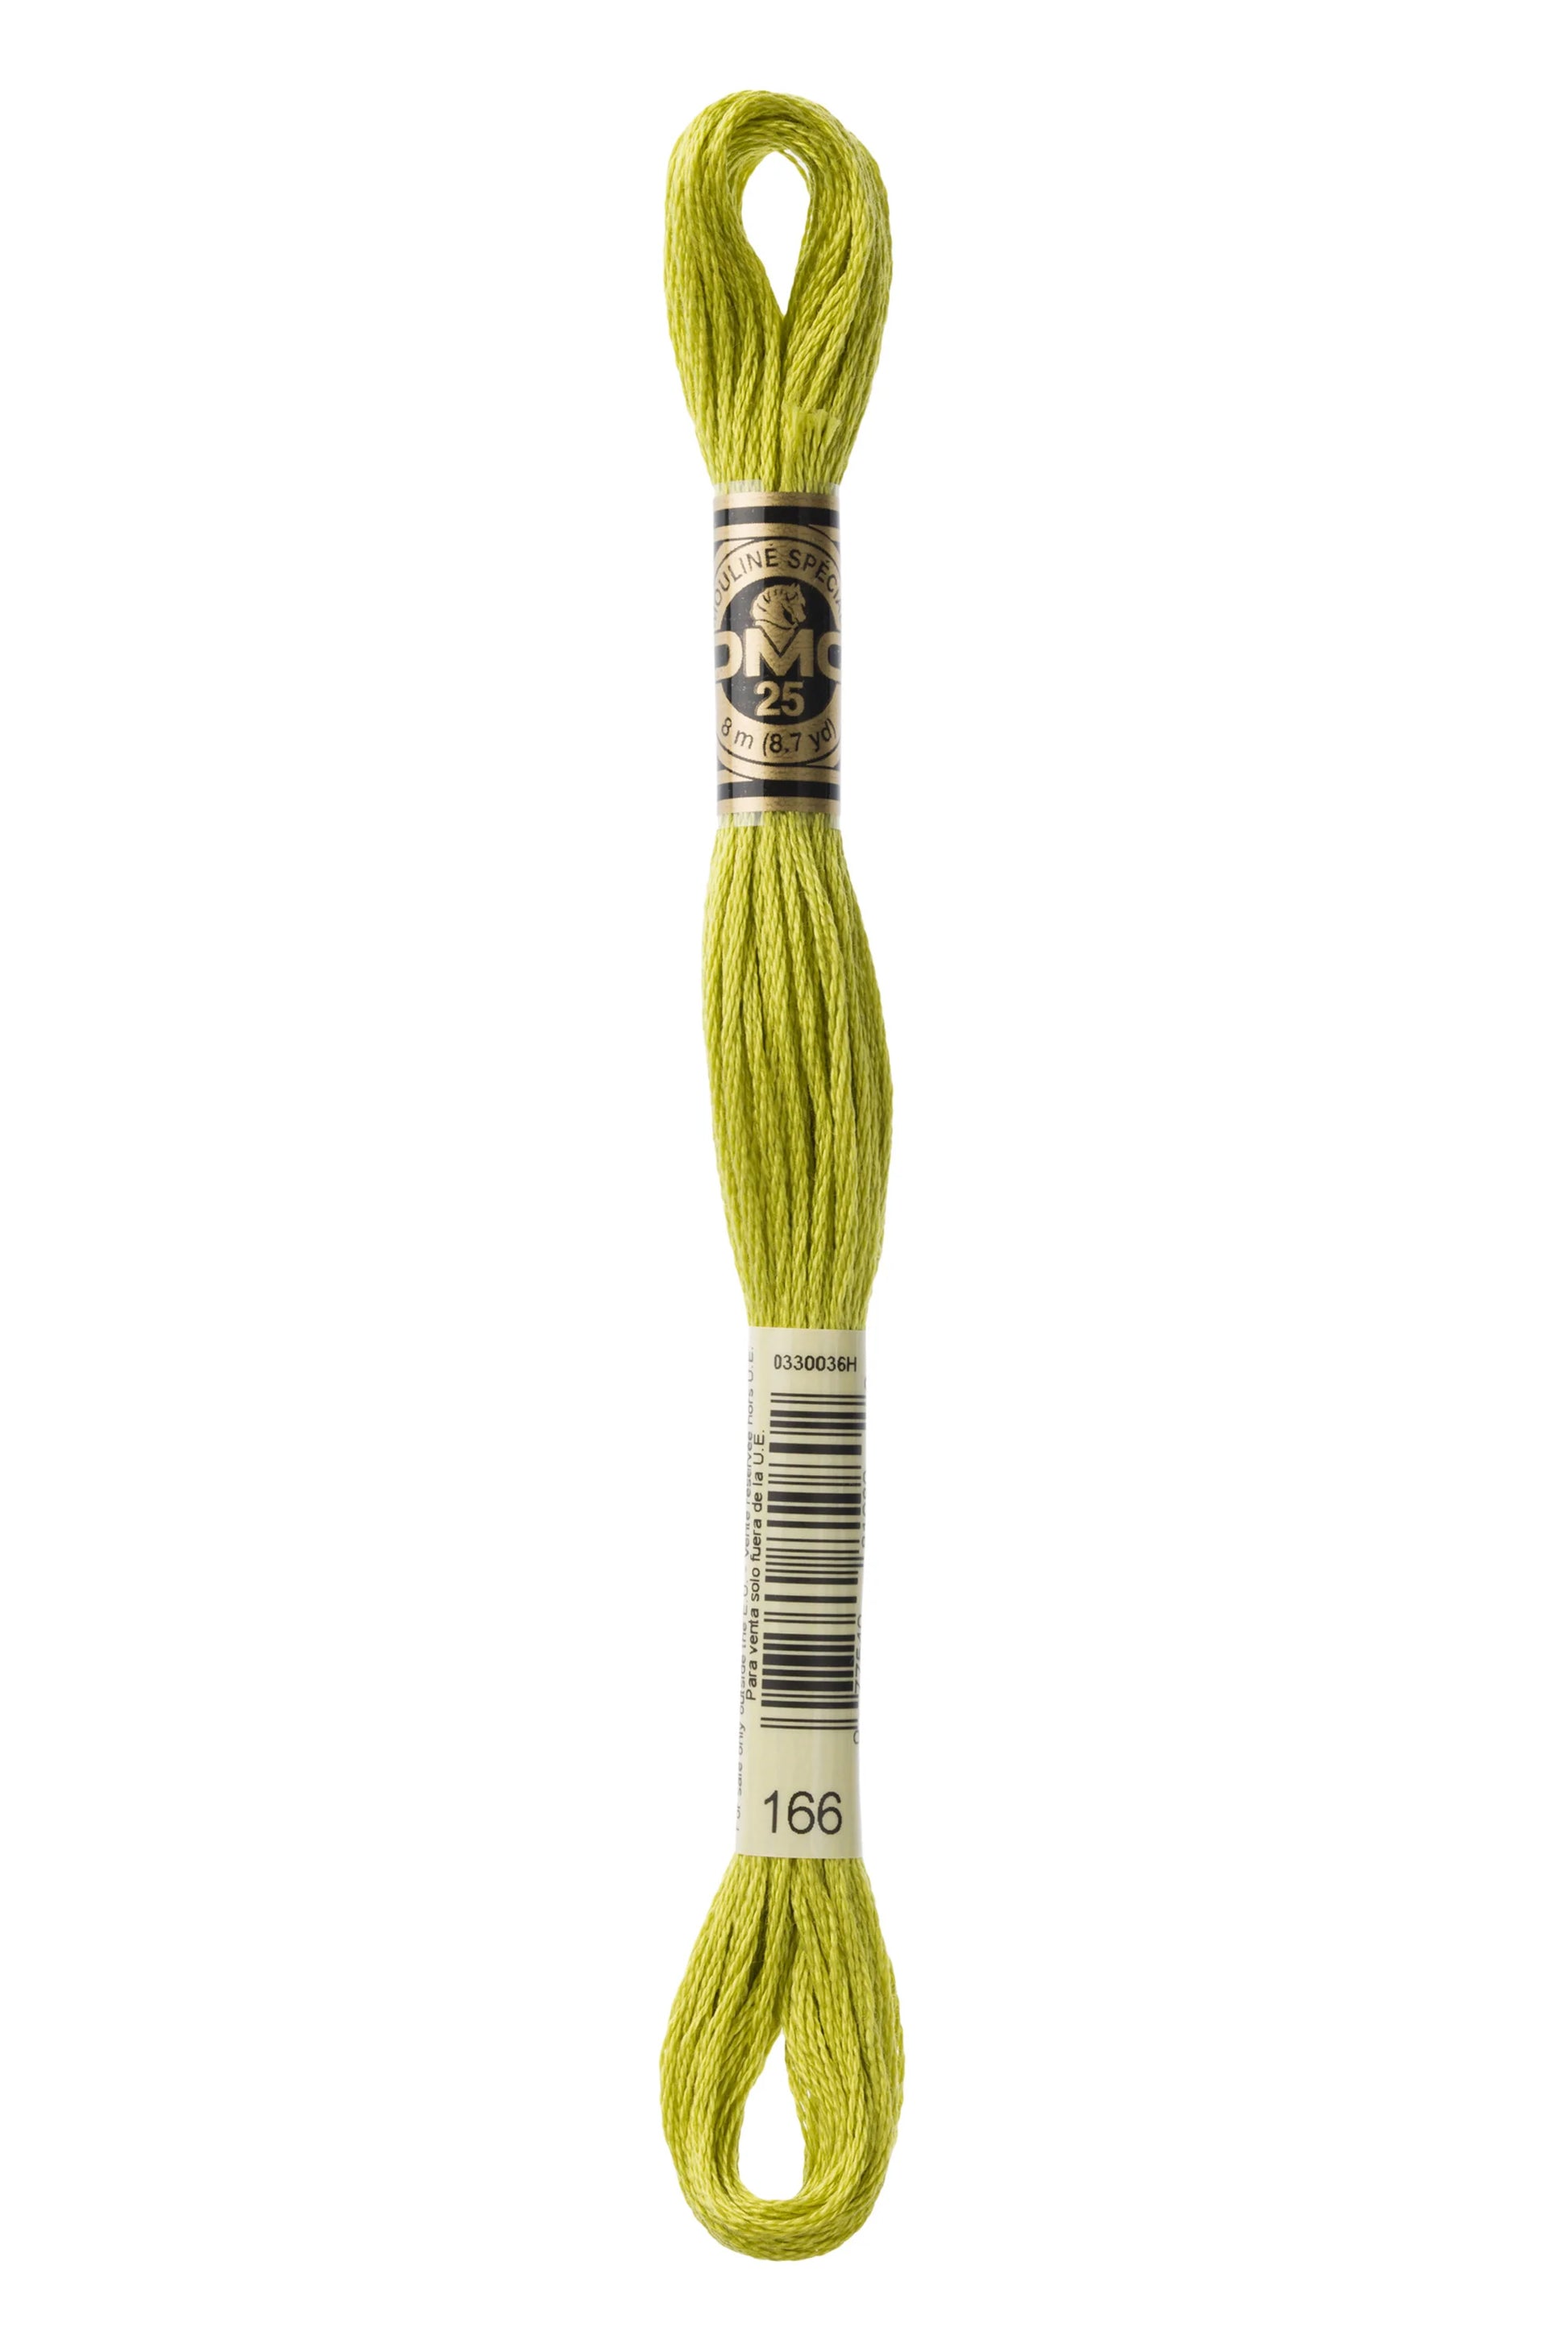 DMC 166 - Lime Green - DMC 6 Strand Embroidery Thread, Thread & Floss, Thread & Floss, The Crafty Grimalkin - A Cross Stitch Store